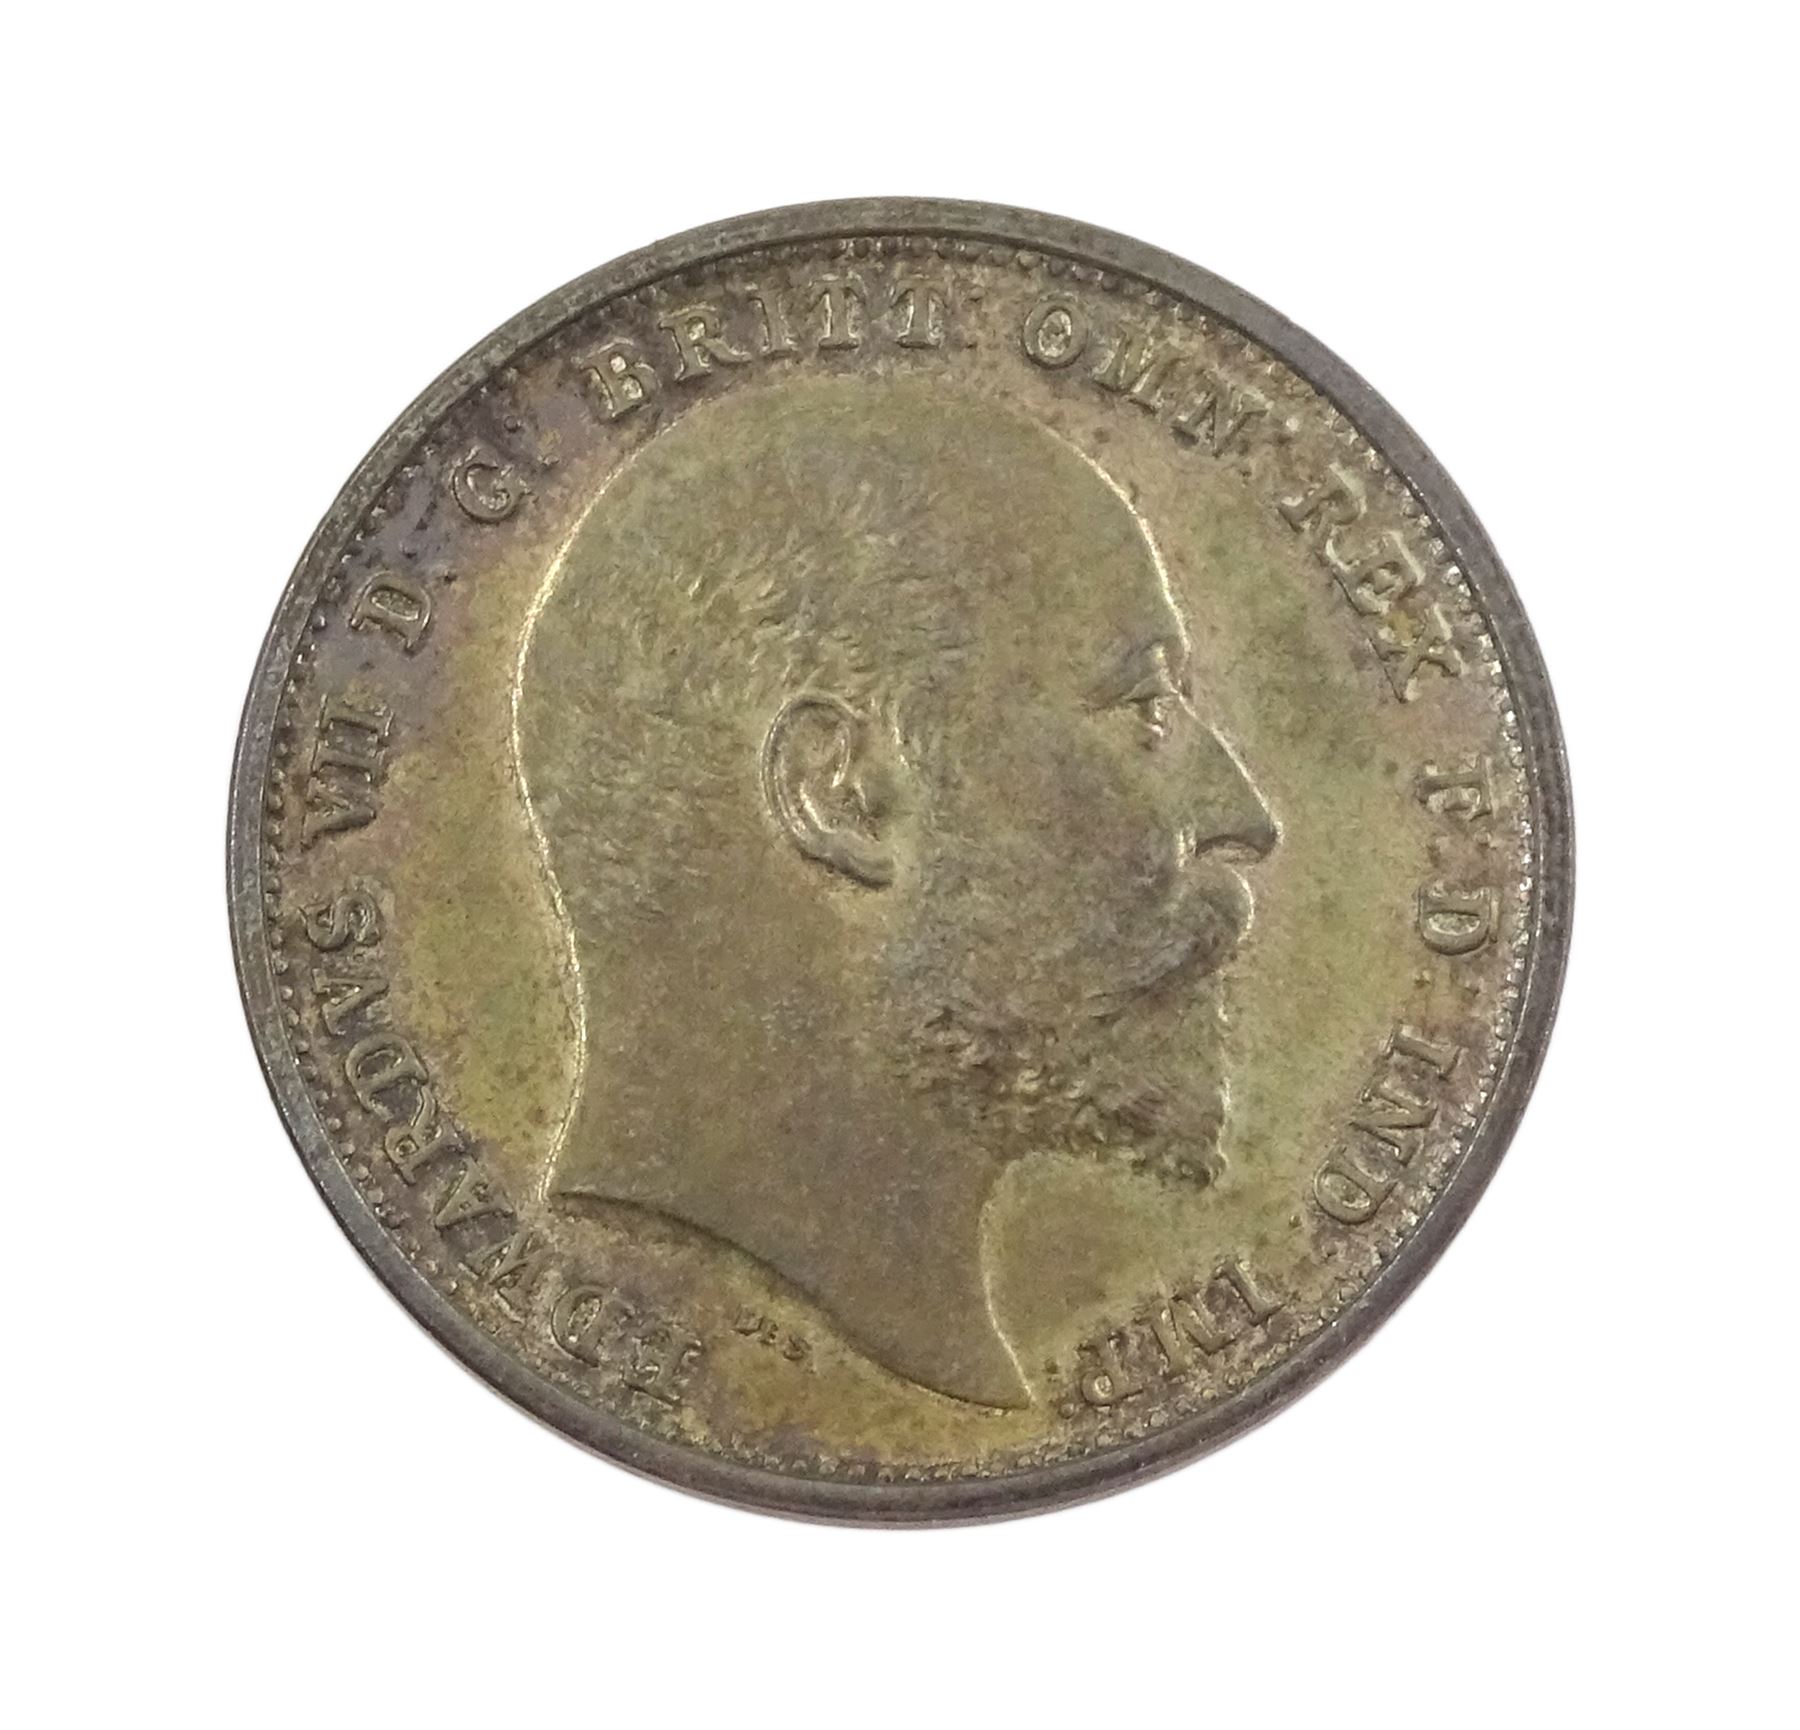 King Edward VII 1902 matt proof short coin set - Image 12 of 26